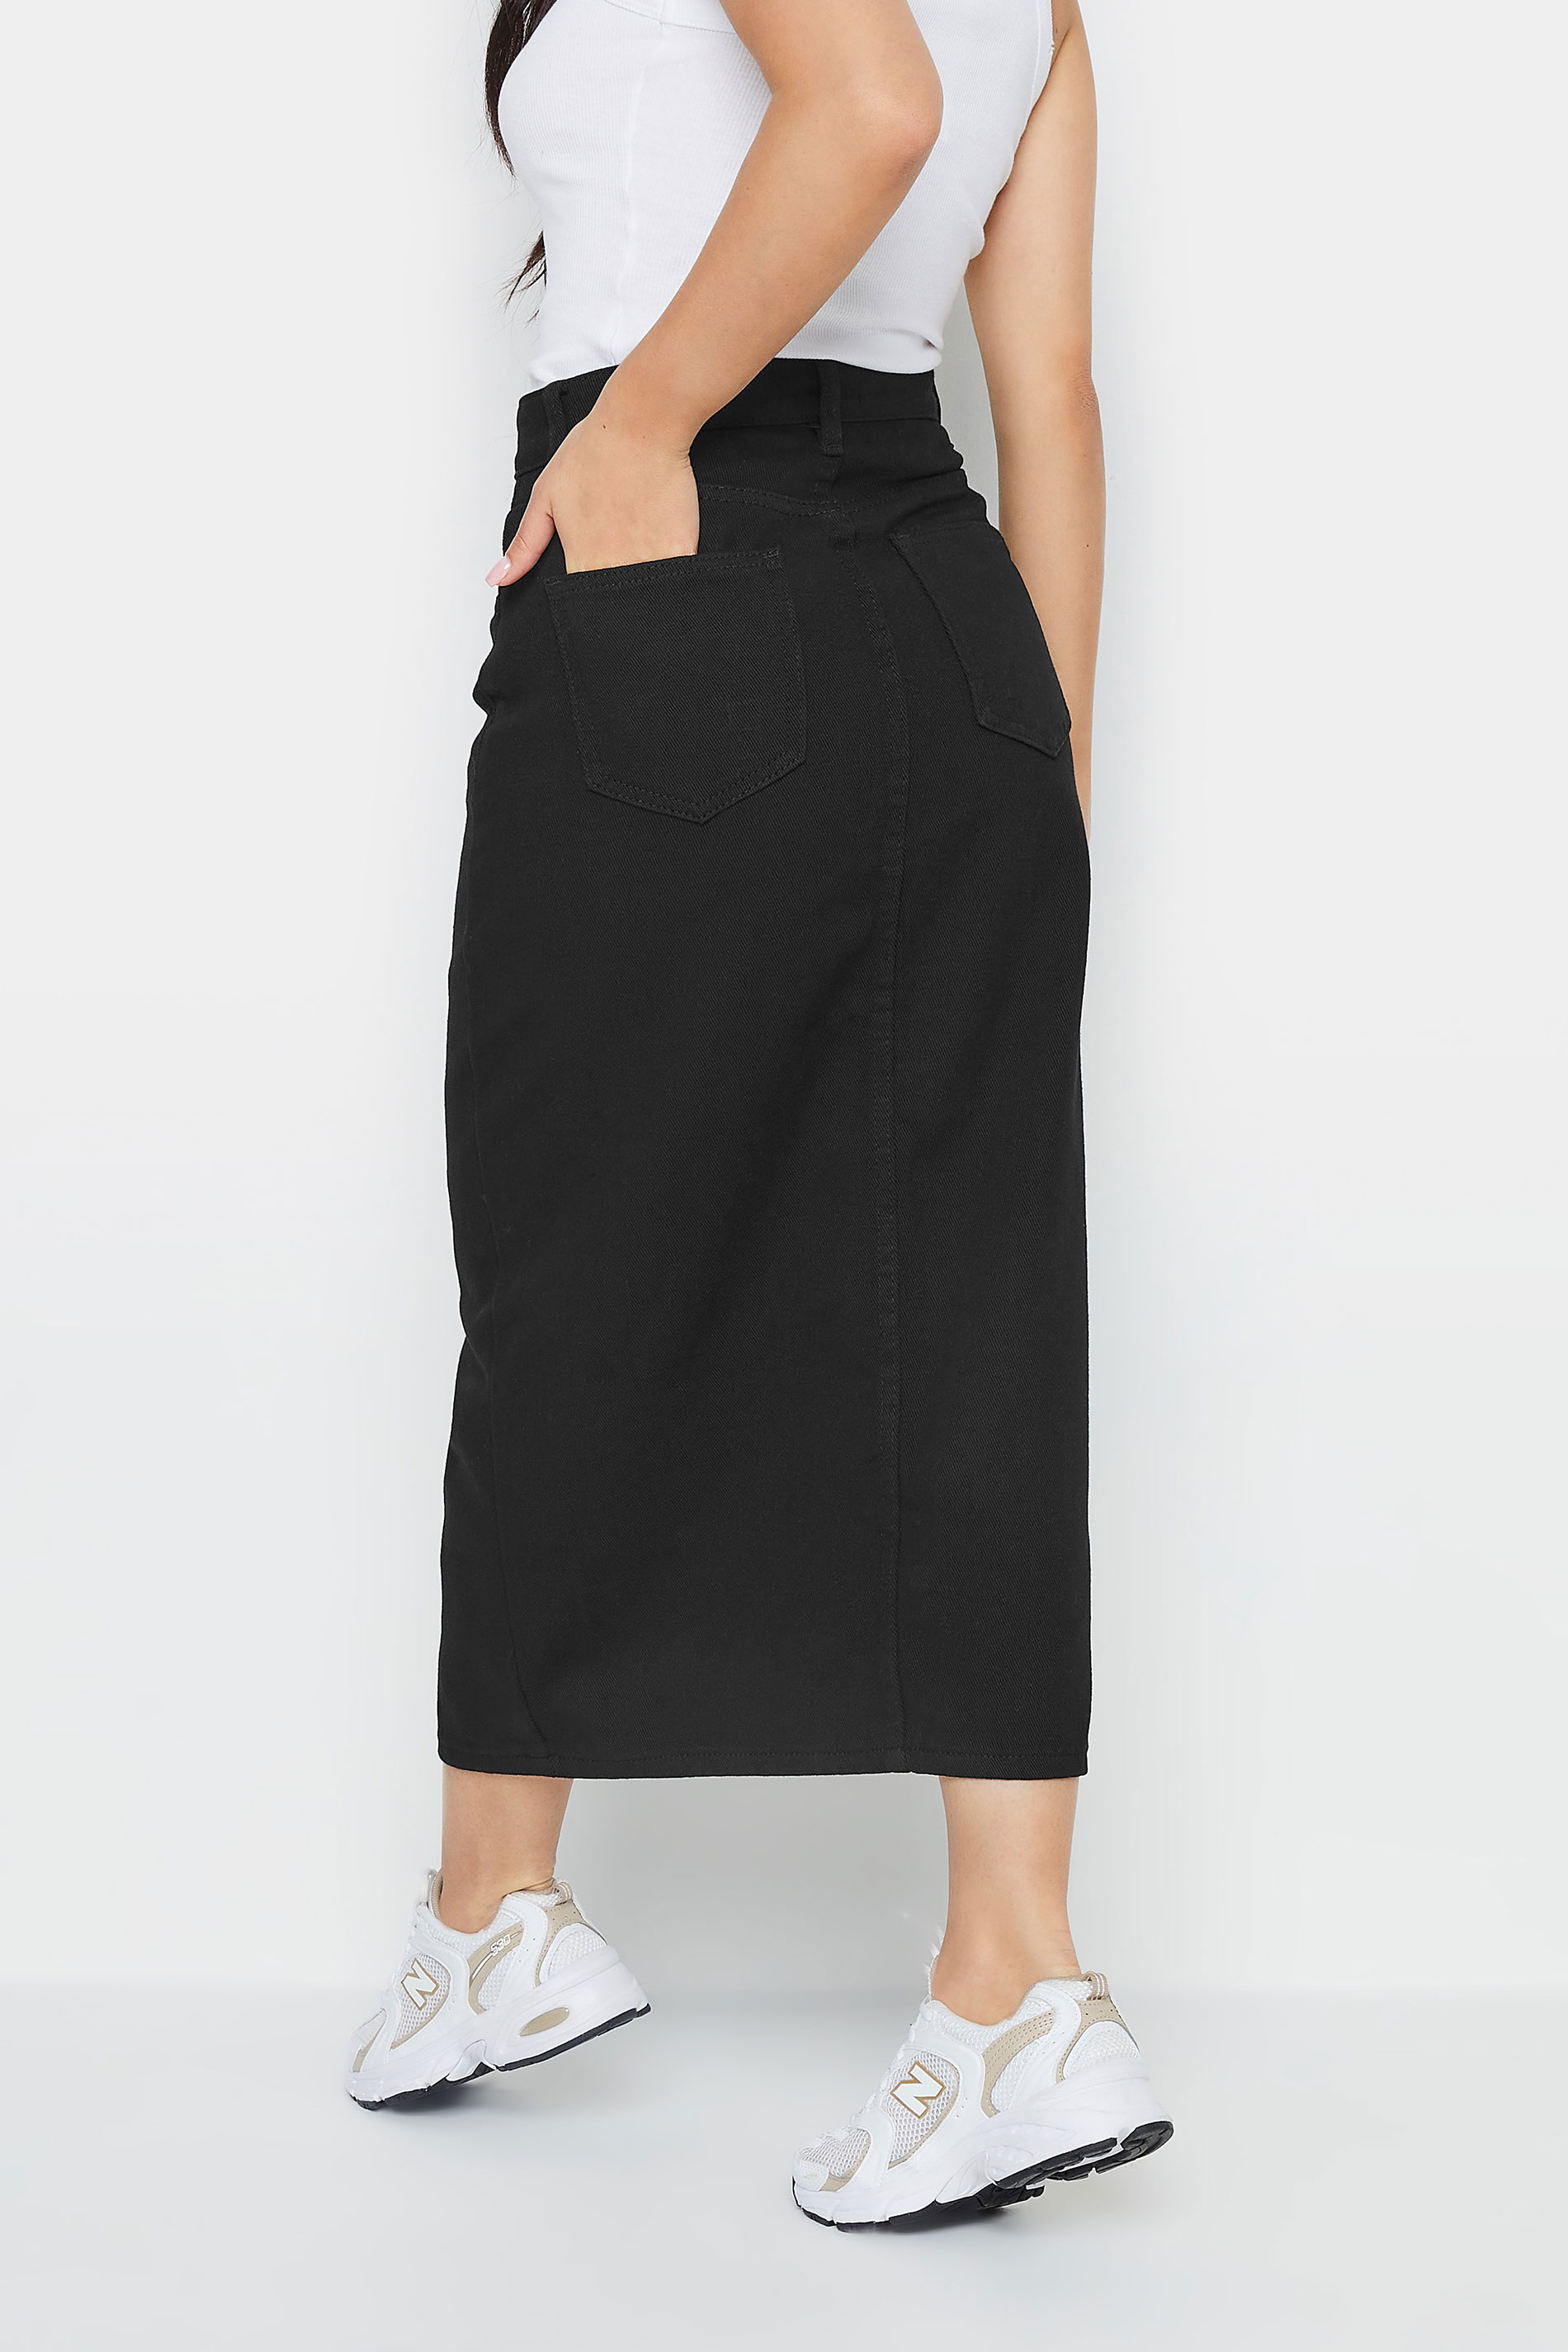 PixieGirl Black Denim Split Midi Skirt | PixieGirl  3